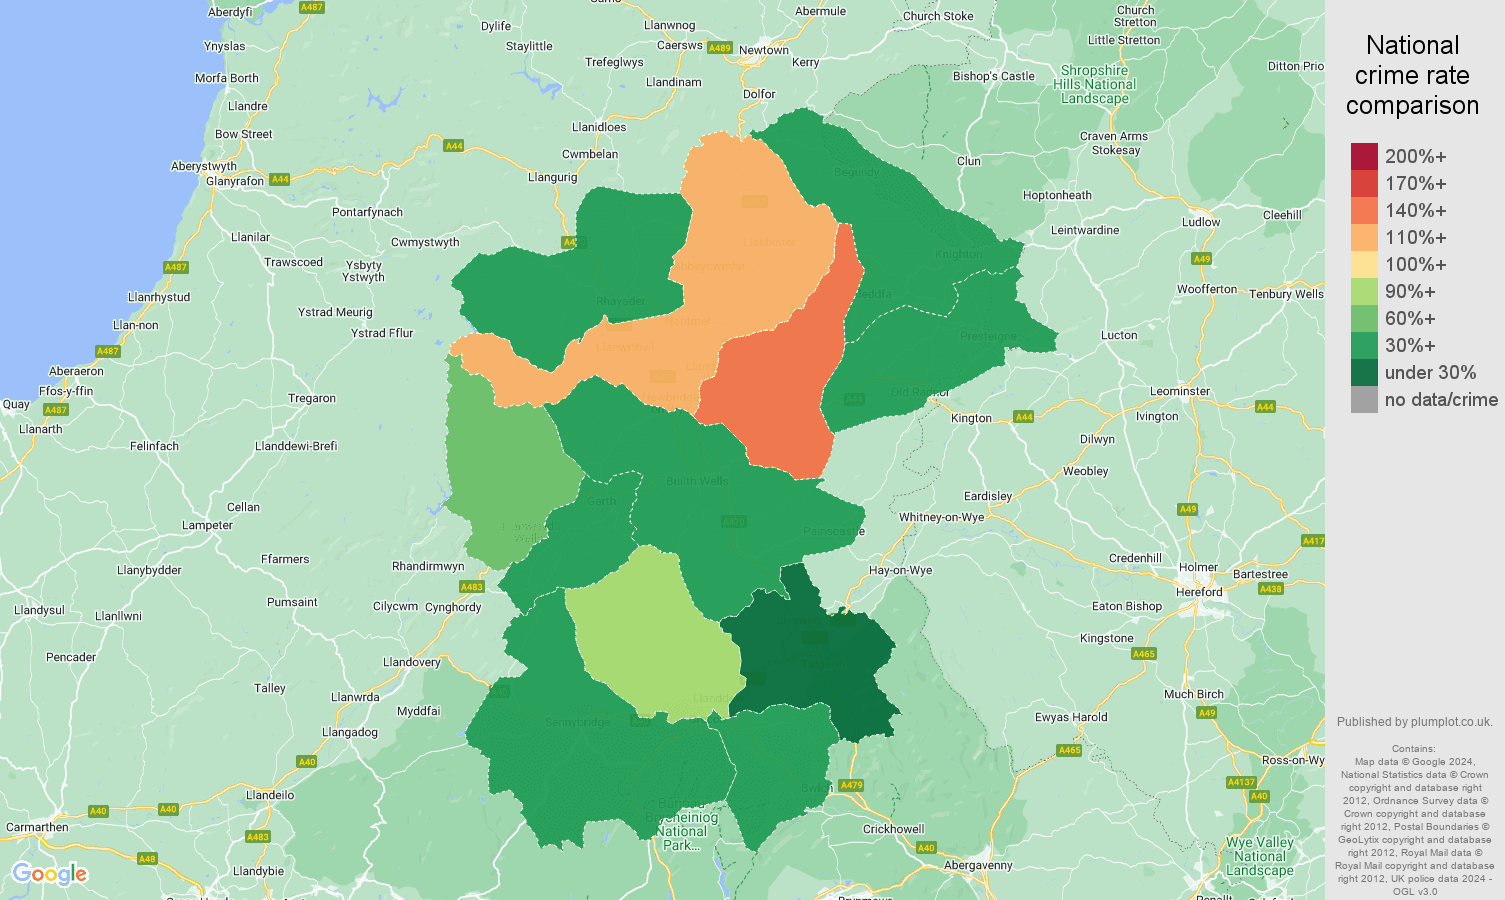 Llandrindod Wells antisocial behaviour crime rate comparison map